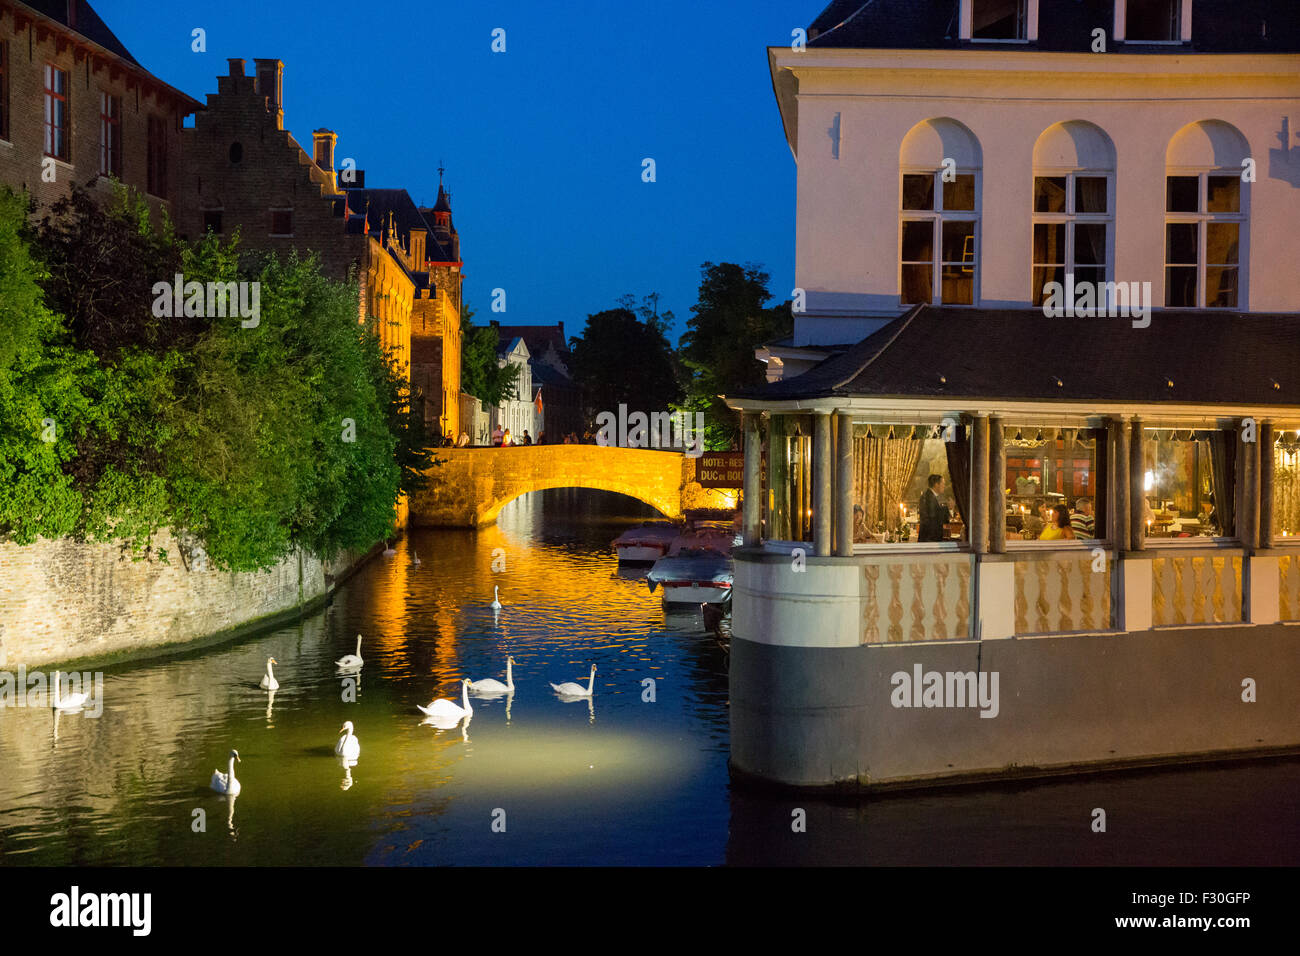 The Duc de Bourgogne Restaurant and Hotel in Brugge, Belgium Stock Photo